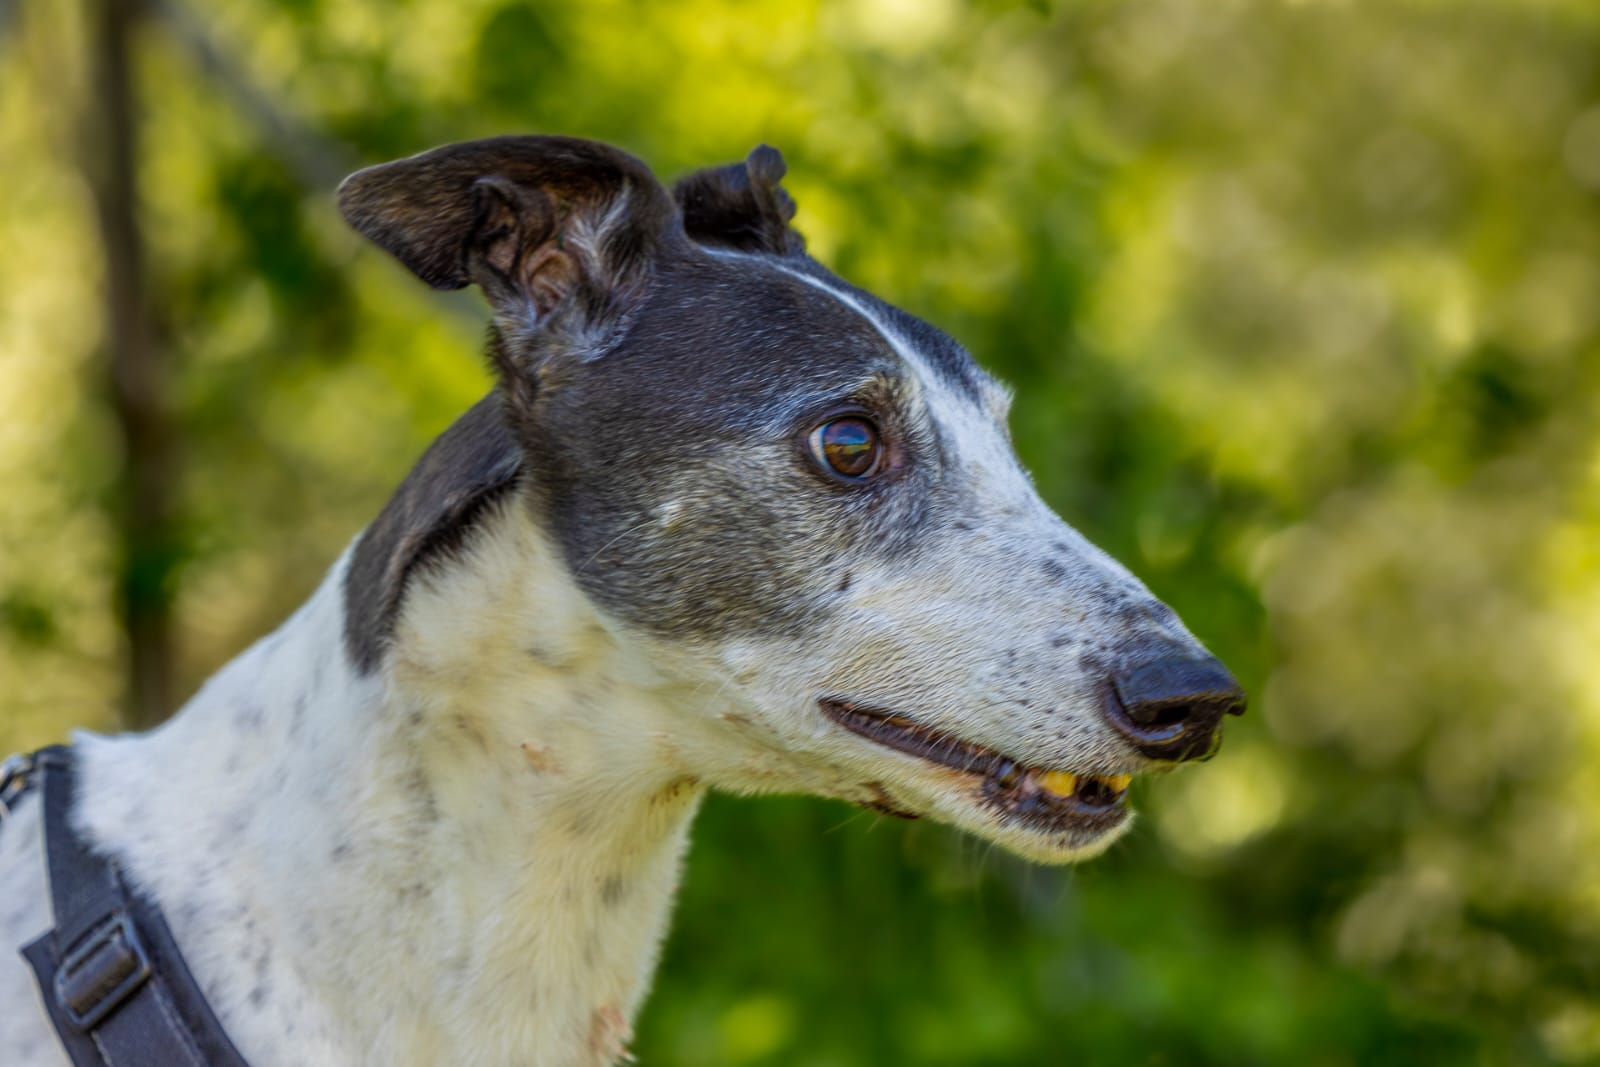 Greyhound-Rüde: PENNY